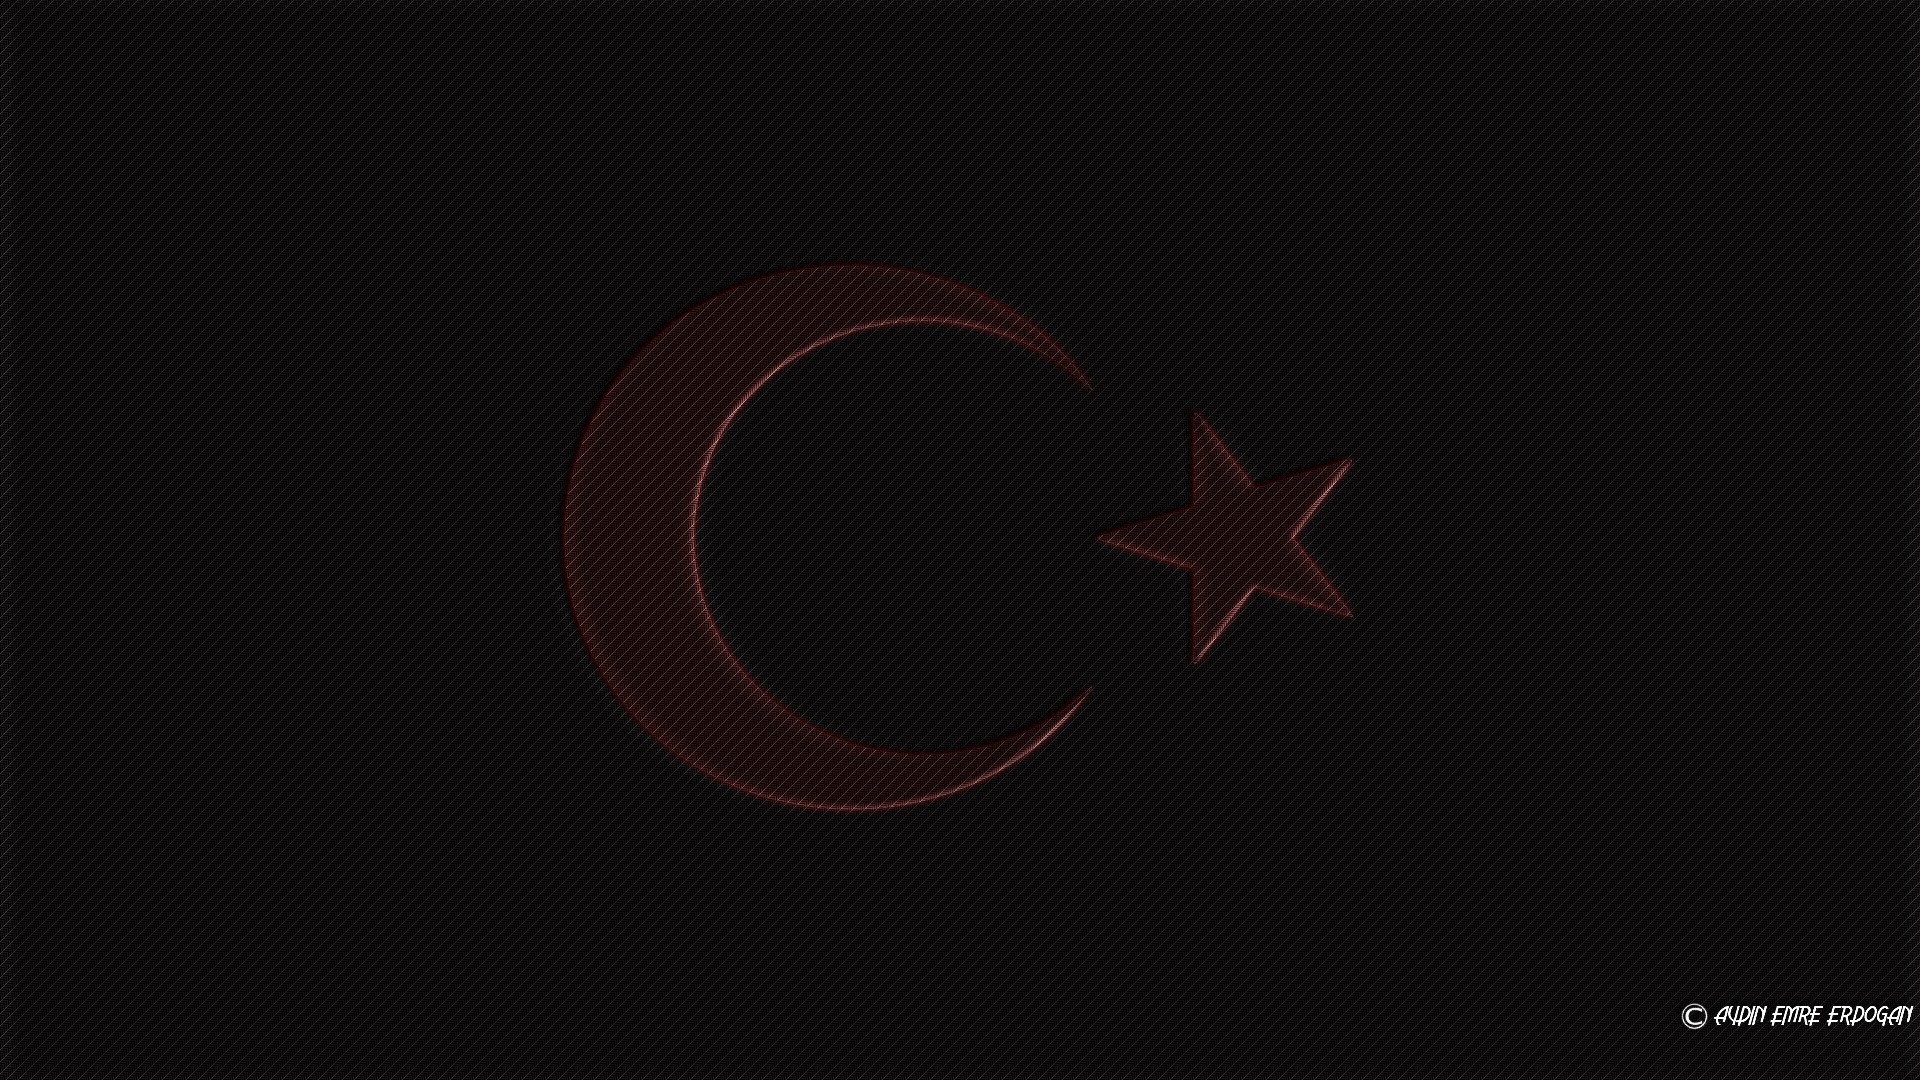 1920x1080  turkey turkish flag nations moon shooting stars wallpaper and  background JPG 626 kB